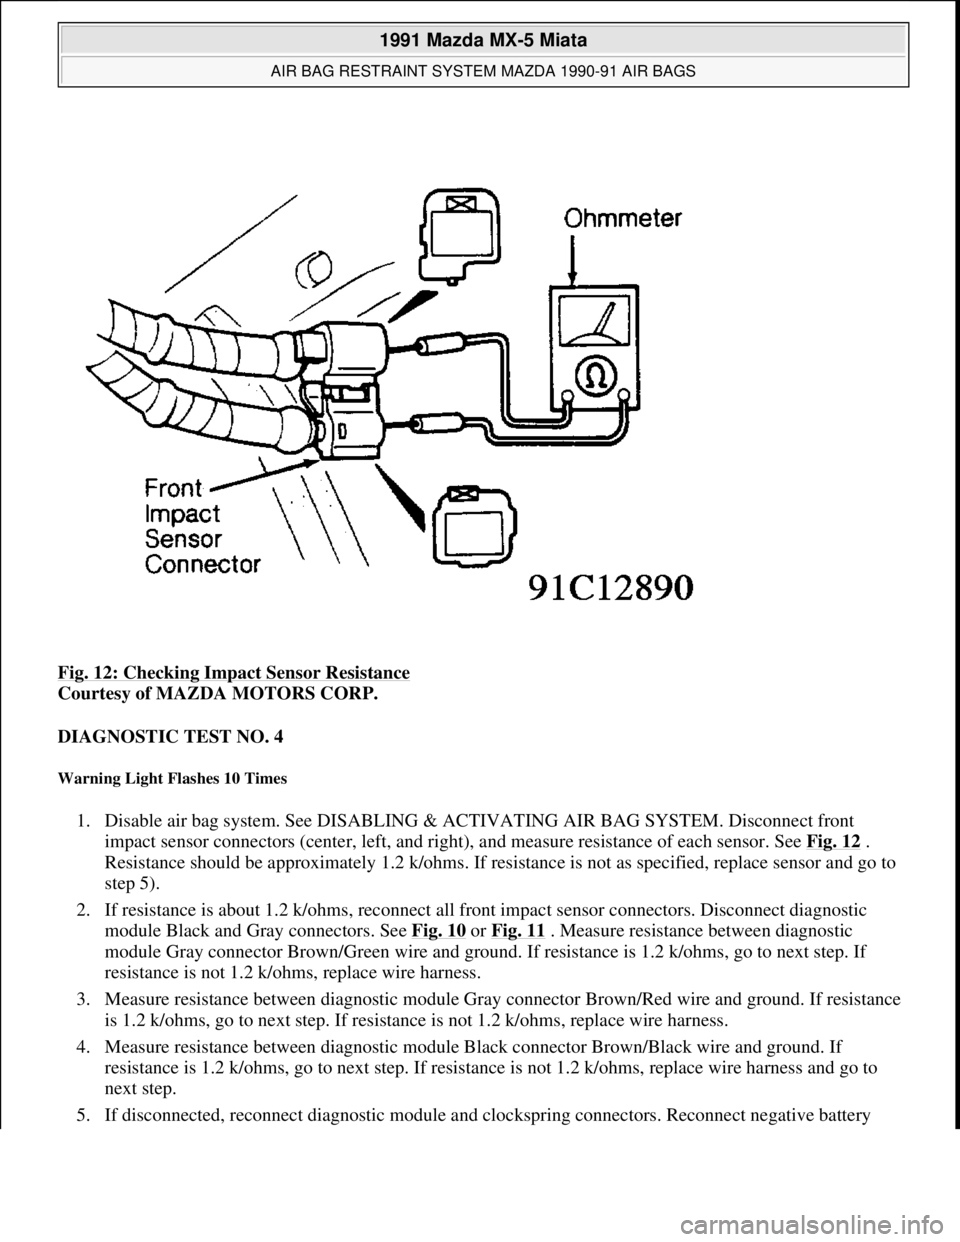 MAZDA MIATA 1991  Factory Service Manual Fig. 12: Checking Impact Sensor Resistance 
Courtesy of MAZDA MOTORS CORP. 
DIAGNOSTIC TEST NO. 4 
Warning Light Flashes 10 Times 
1. Disable air bag system. See DISABLING & ACTIVATING AIR BAG SYSTEM.